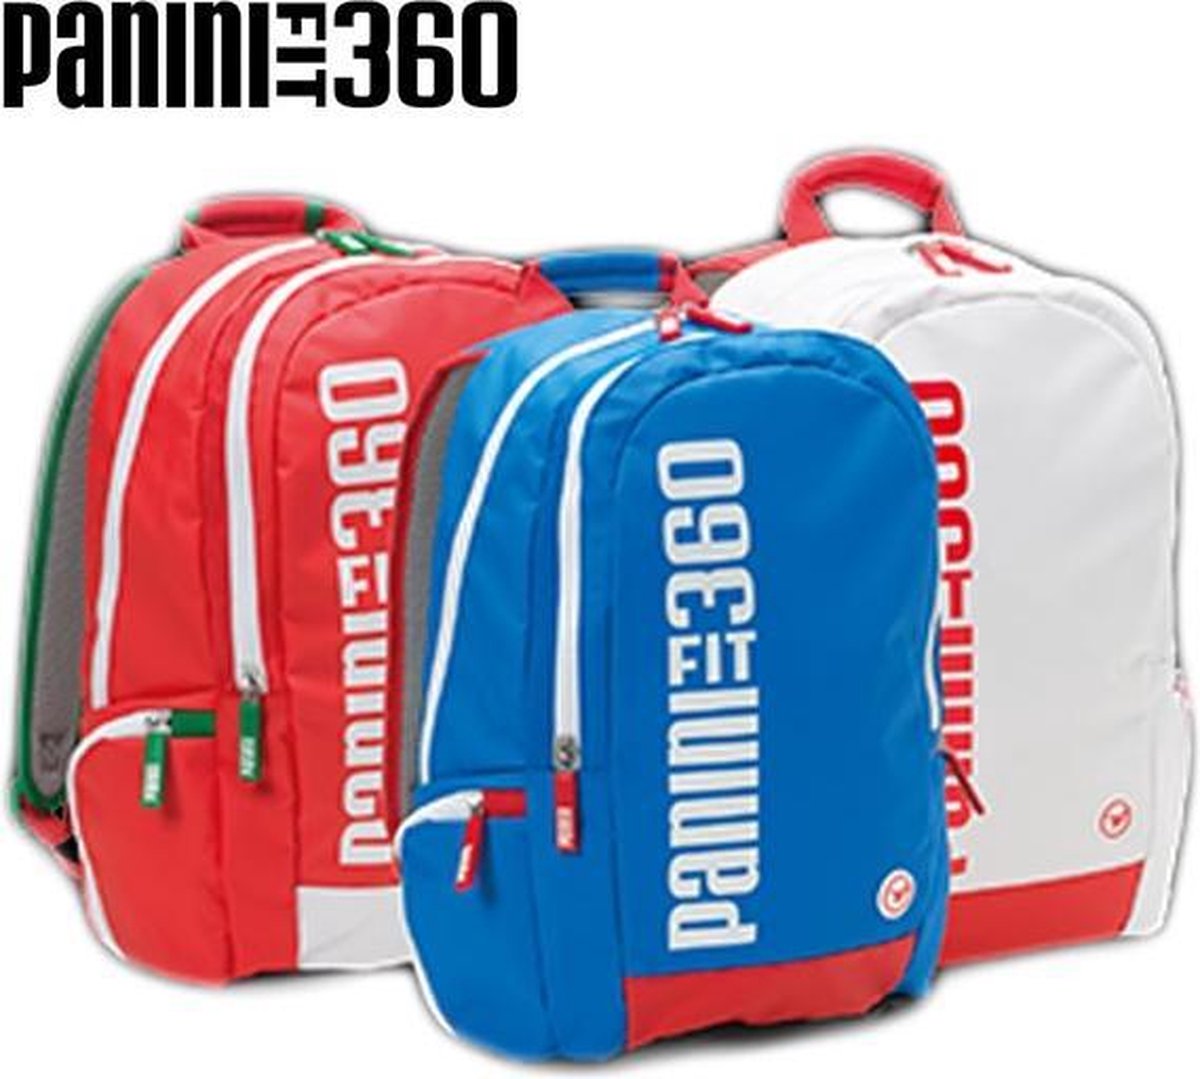 Panini Fit 360 rugzak - Backpack - Sporttas - Tas | Wit | bol.com